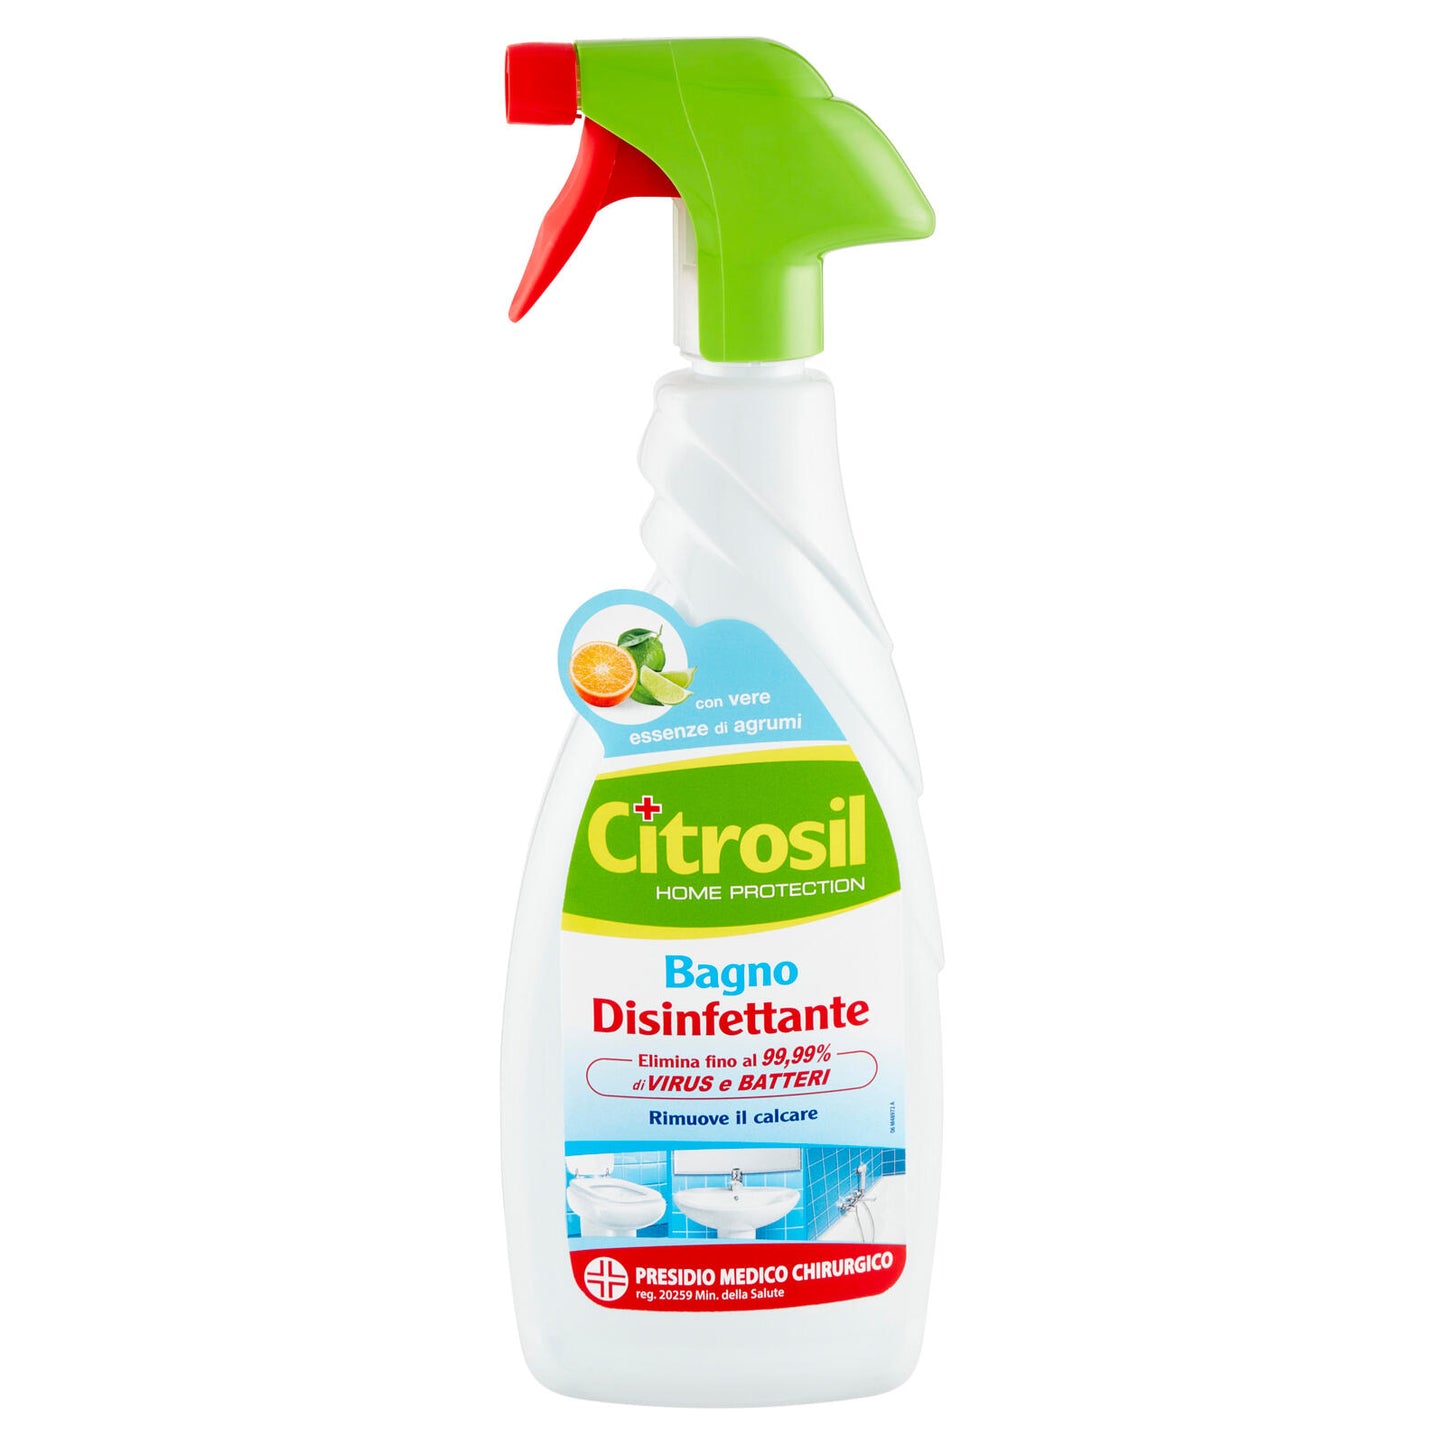 Citrosil Home Protection - Bagno Disinfettante virucida Green Cap, 650 ml